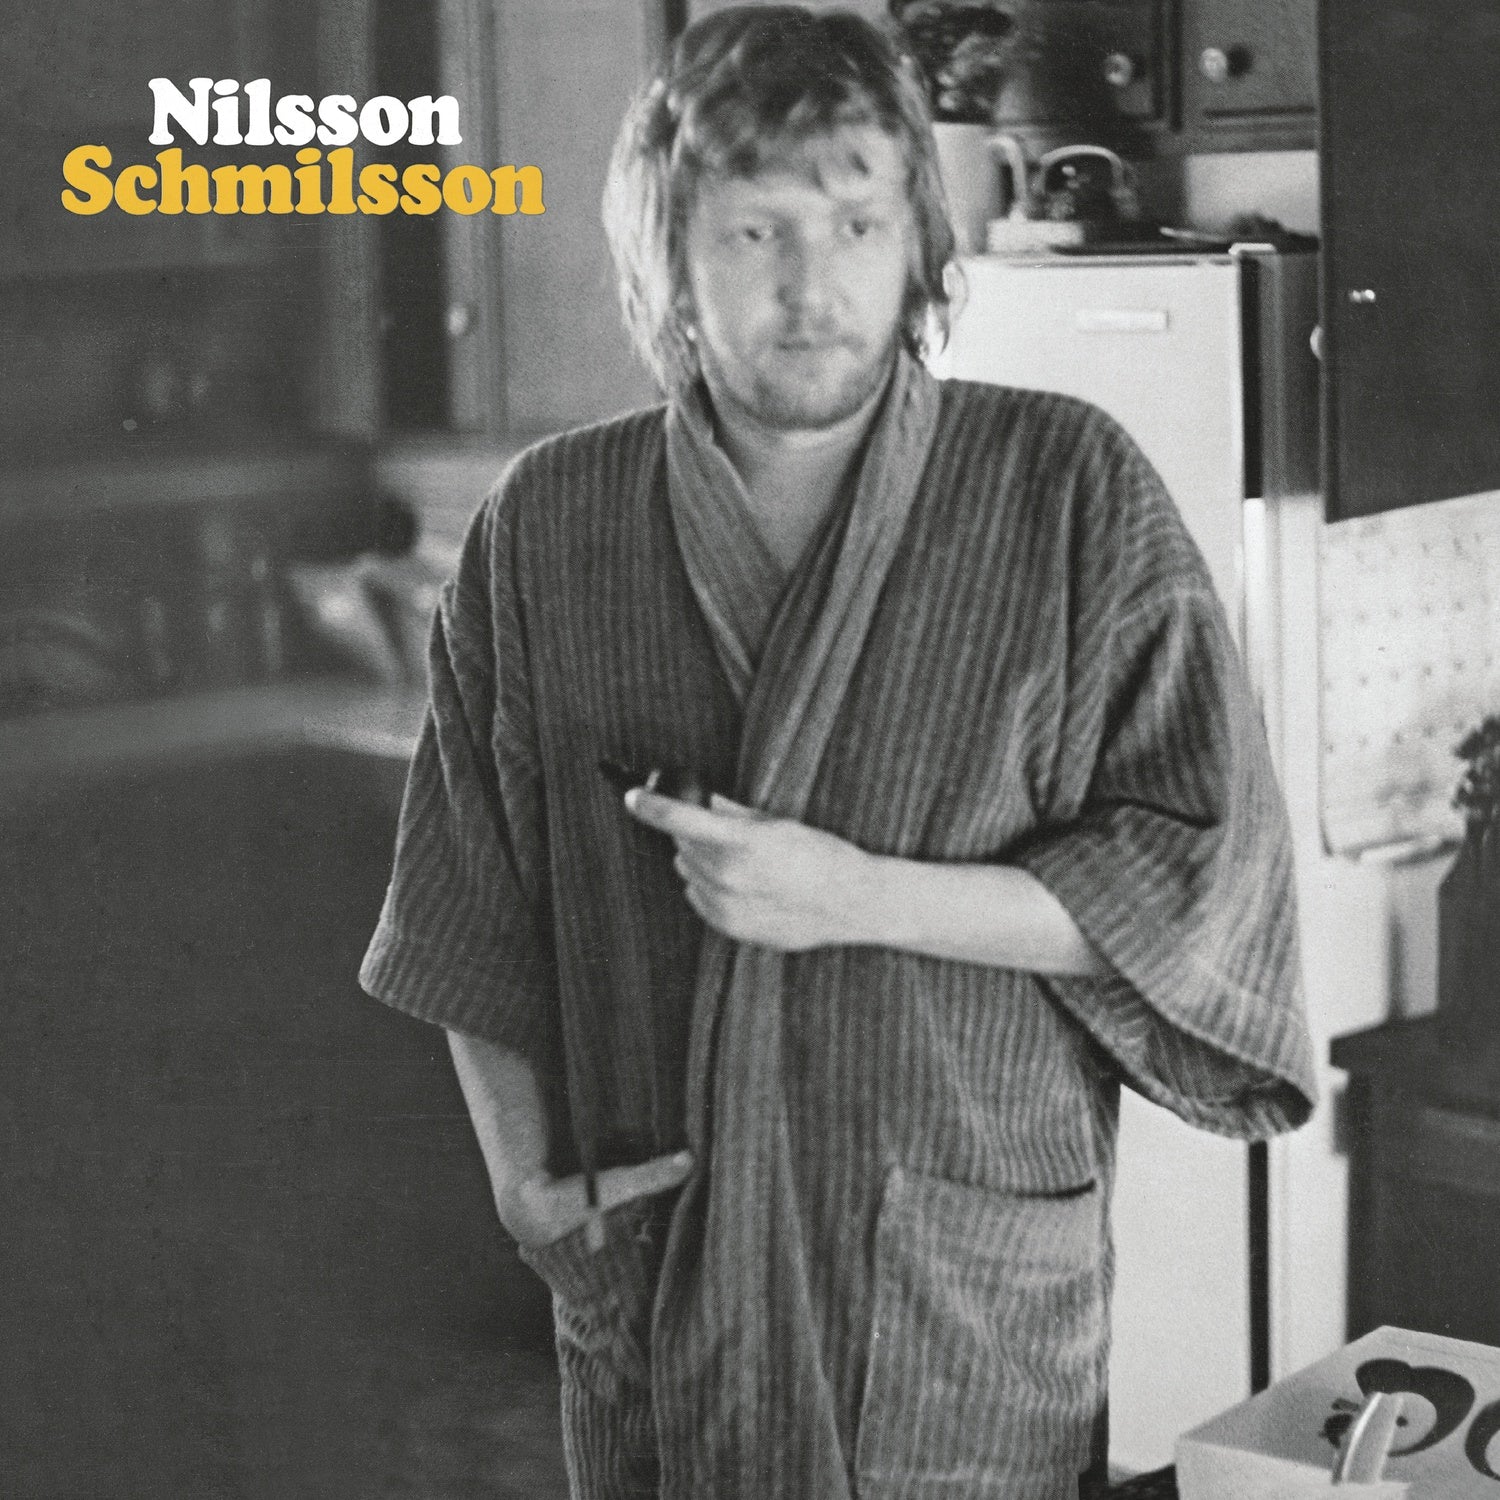 Harry Nilsson ‎– Nilsson Schmilsson (1971) - New LP Record 2017 RCA Vinyl - Pop Rock / Soft Rock